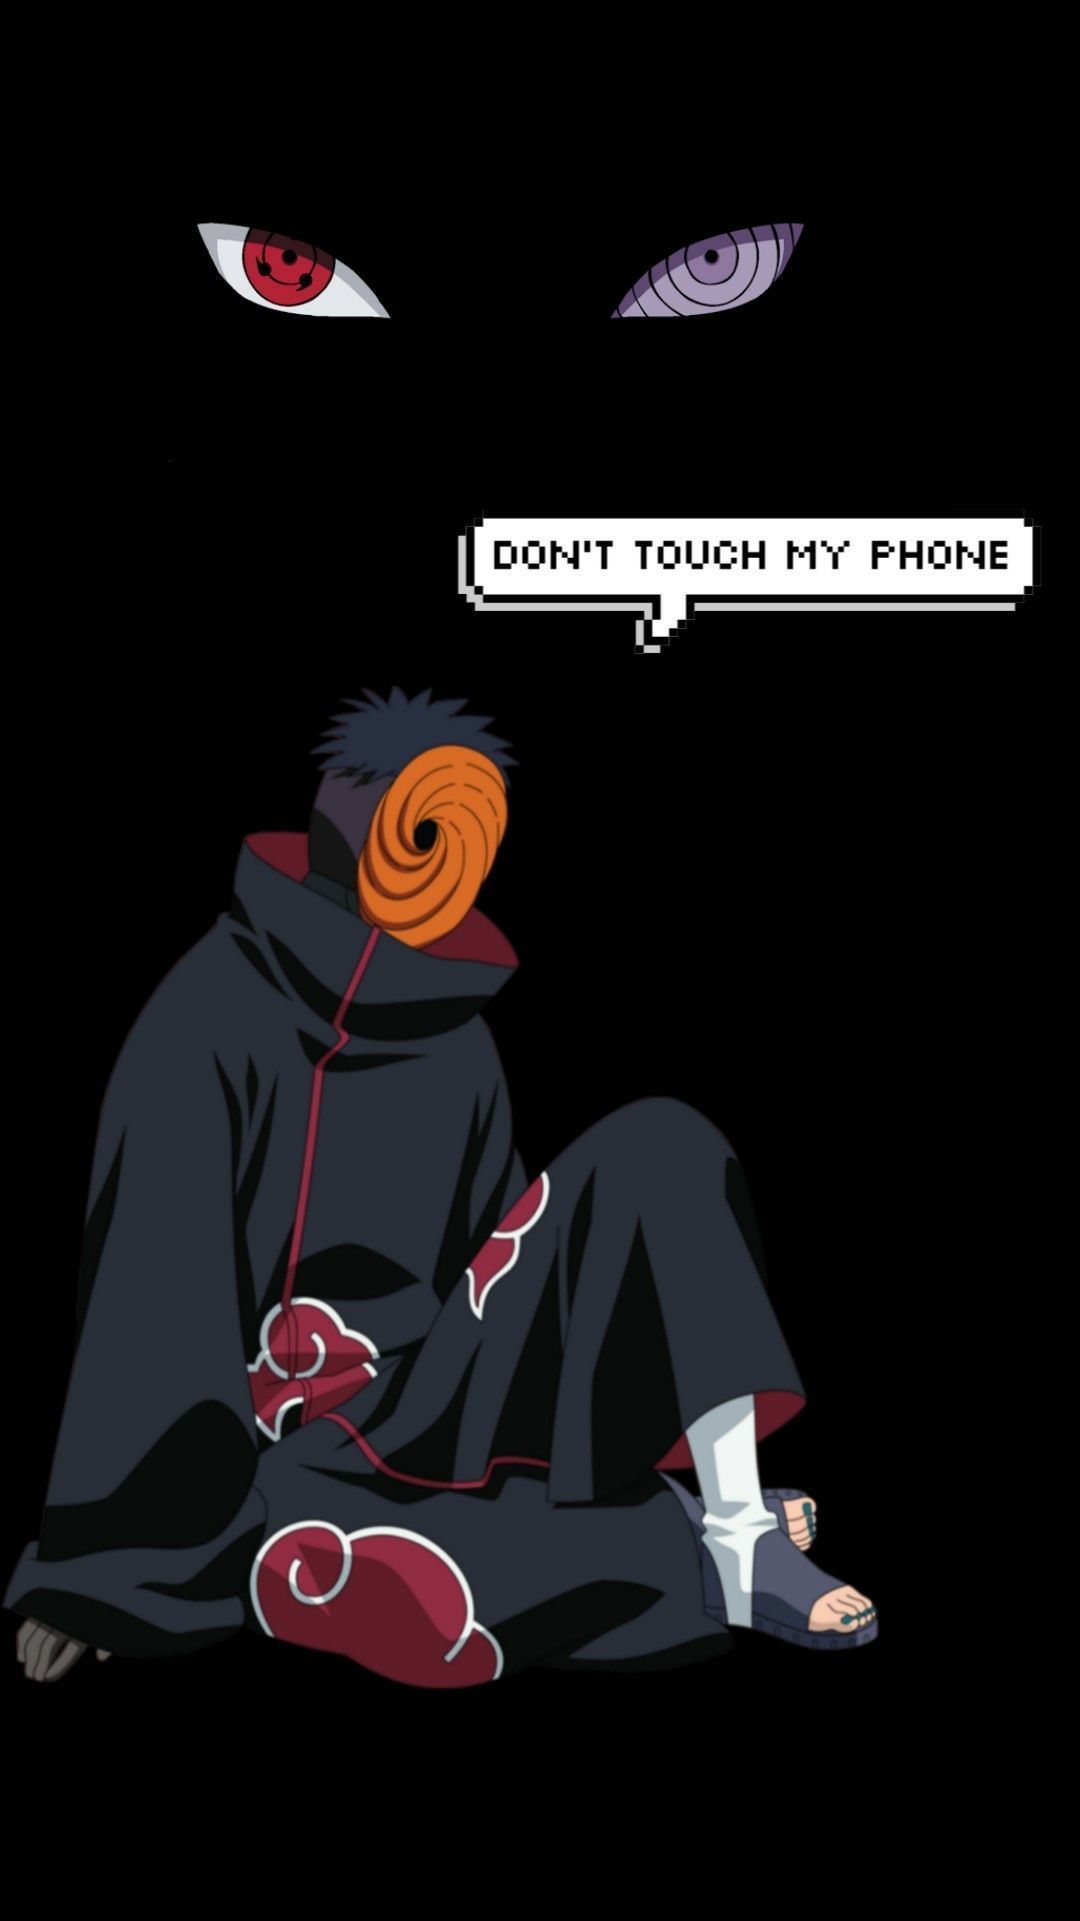 OBITO UCHIHA TOBI. Naruto Wallpaper Iphone, Anime Lock Screen Wallpaper, Anime Wallpaper Live